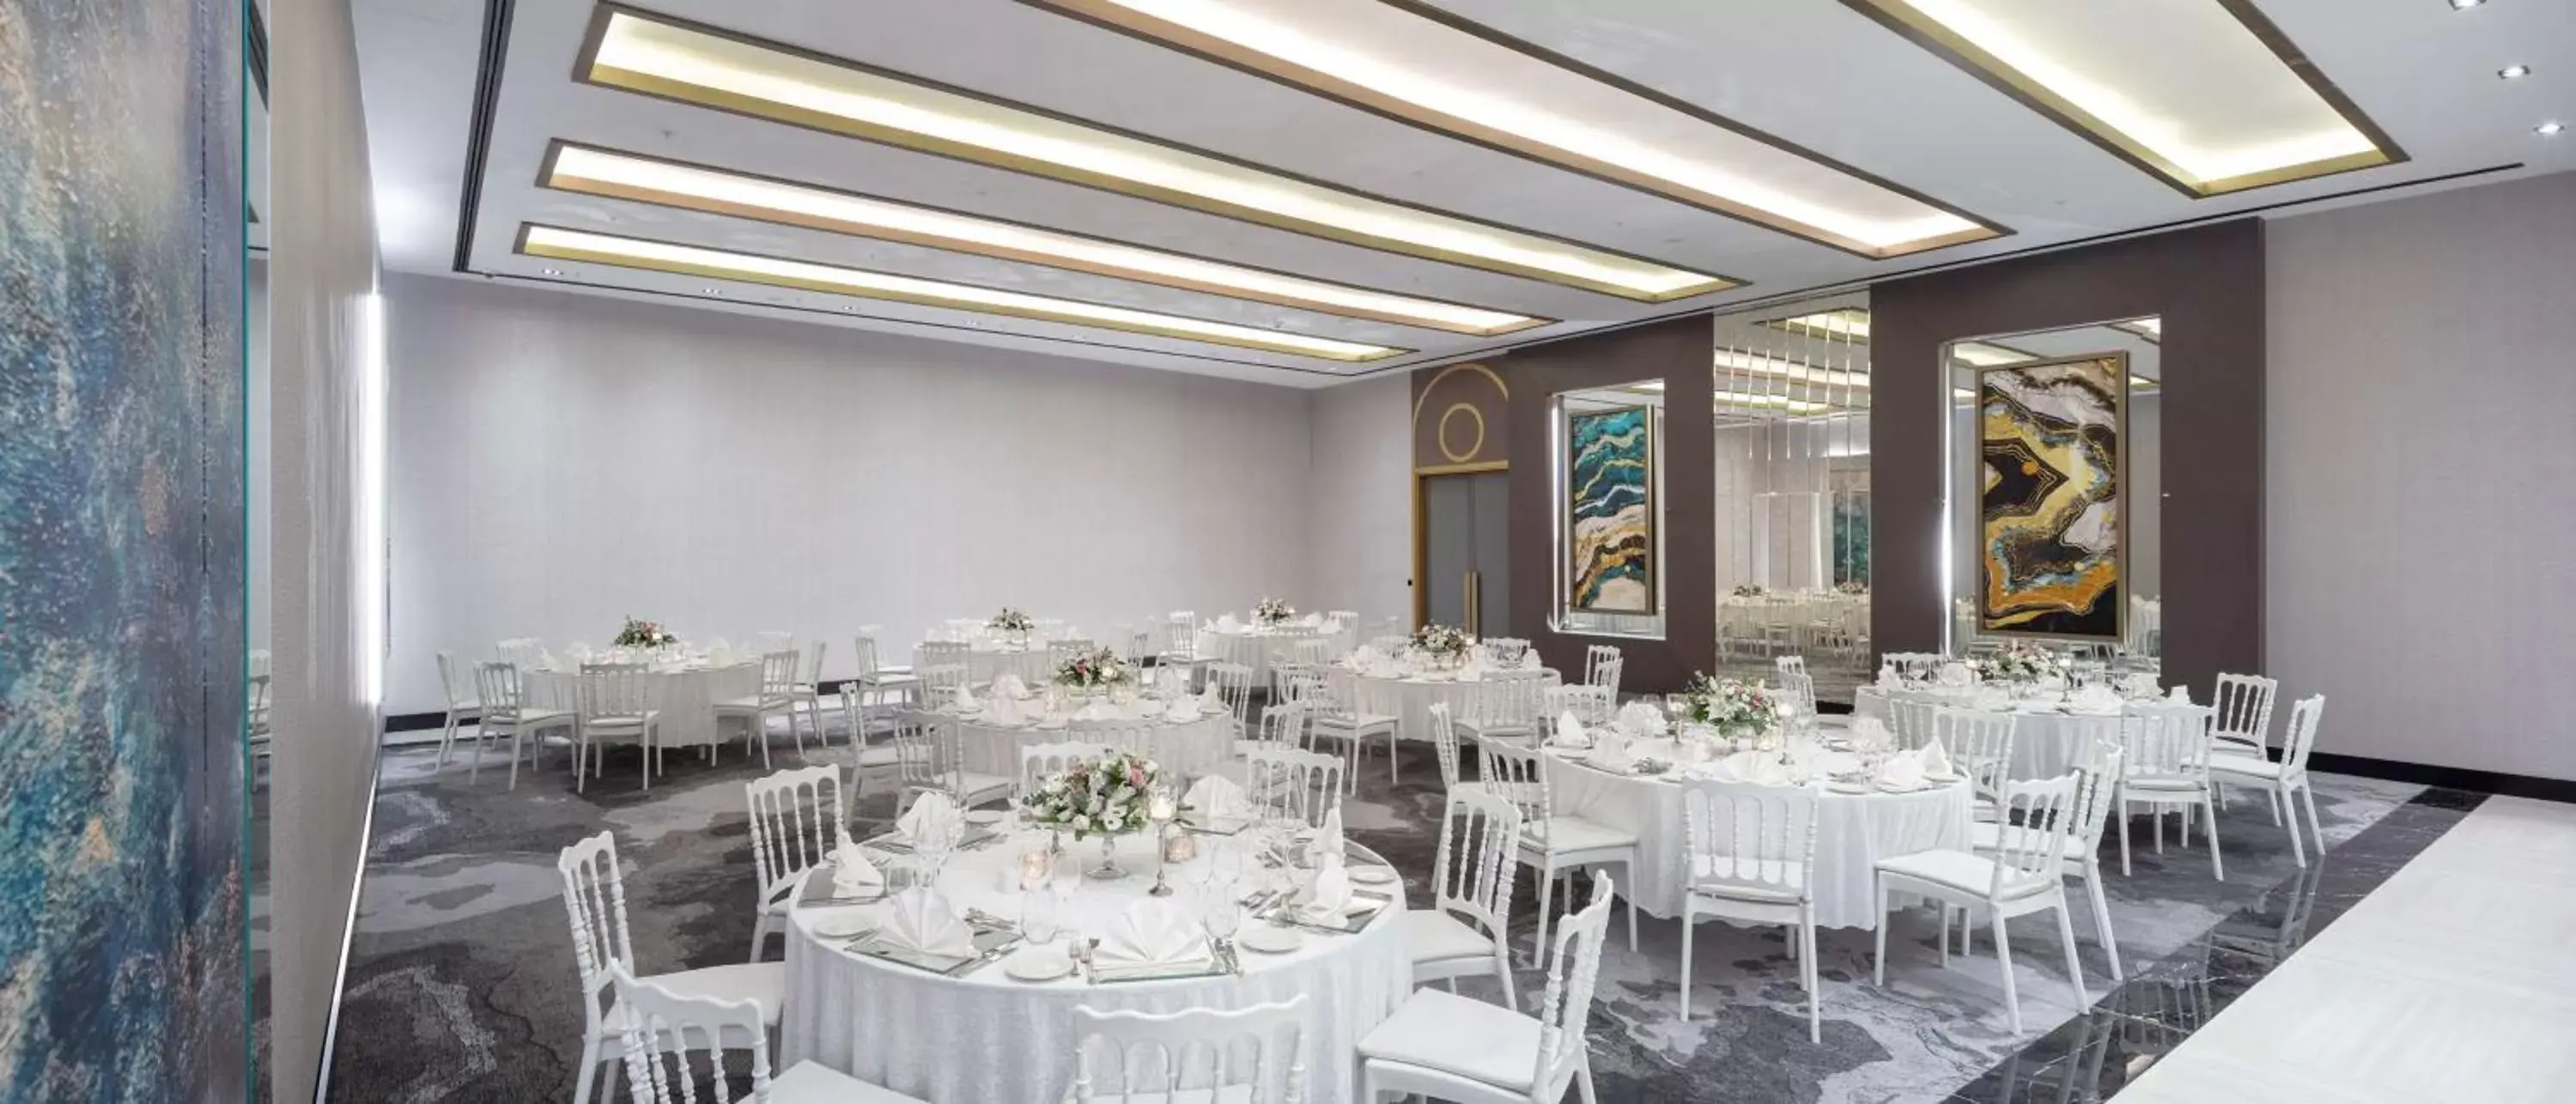 Banquet/Function facilities, Banquet Facilities in Radisson Hotel Izmir Aliaga